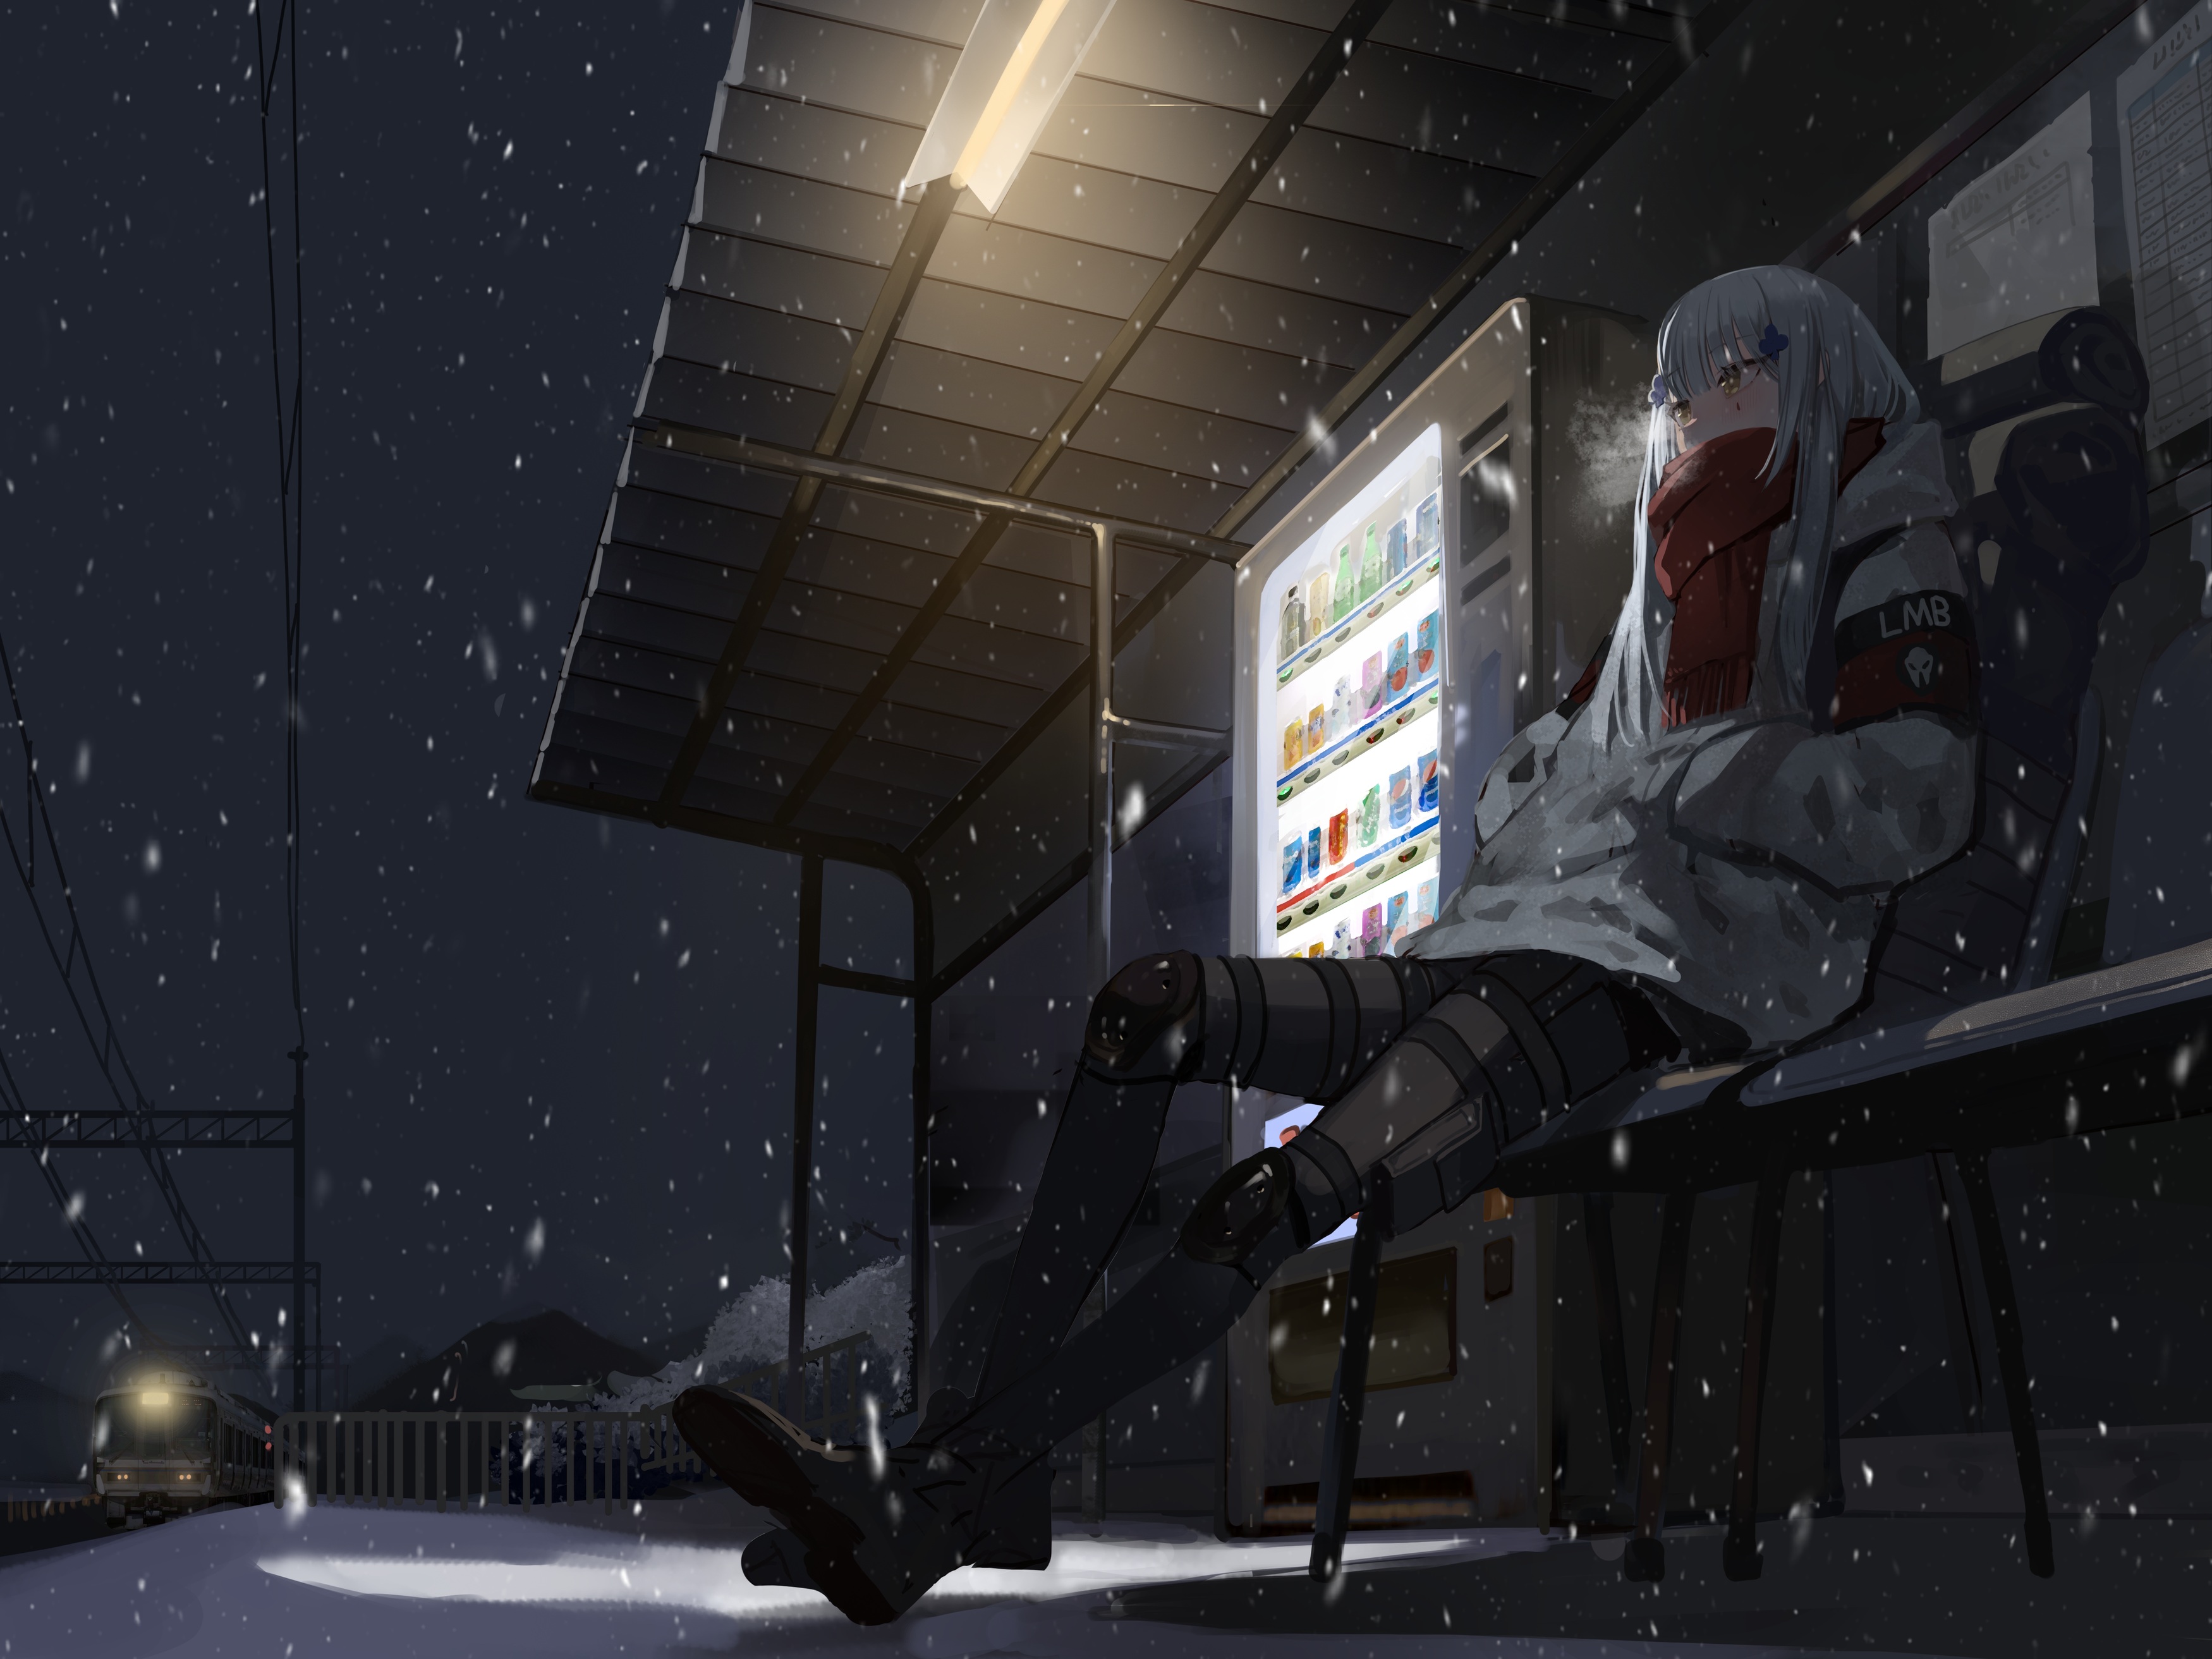 Anime Anime Girls Scarf Snow Night Train Station Train Coats Girls Frontline HK416 Girls Frontline B 3500x2625